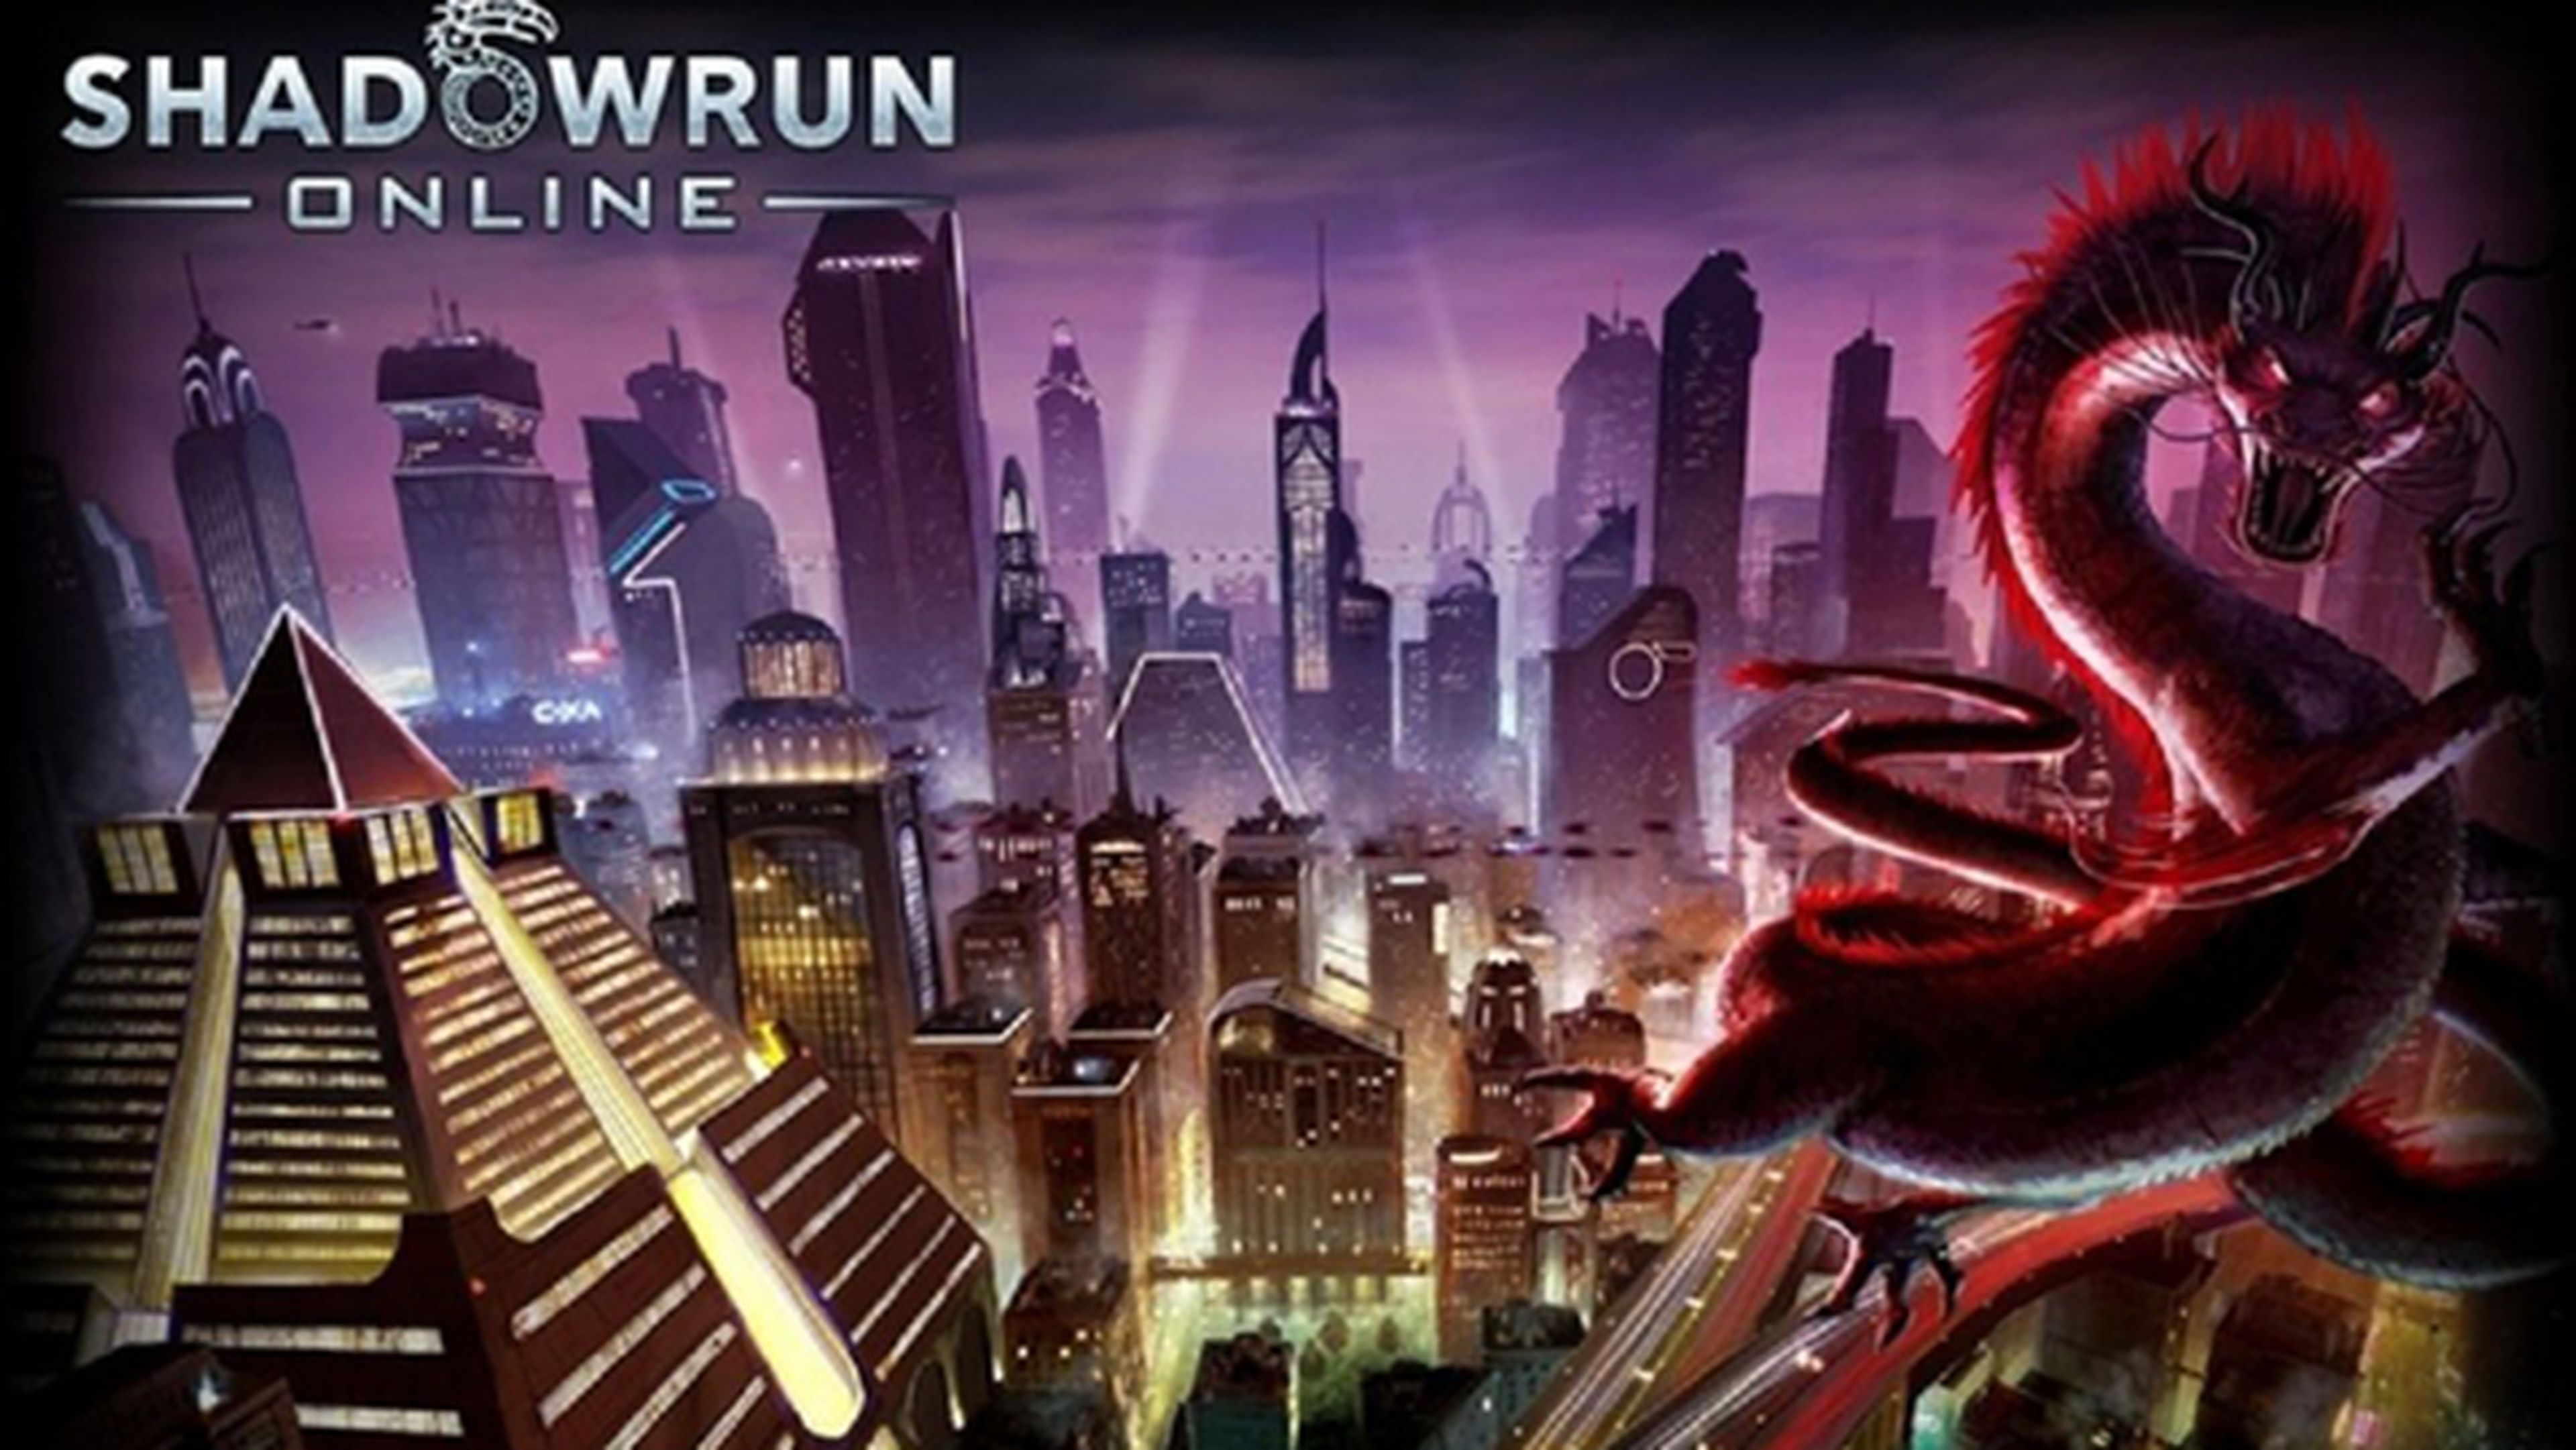 Shadowrun Online irrumpe en Kickstarter